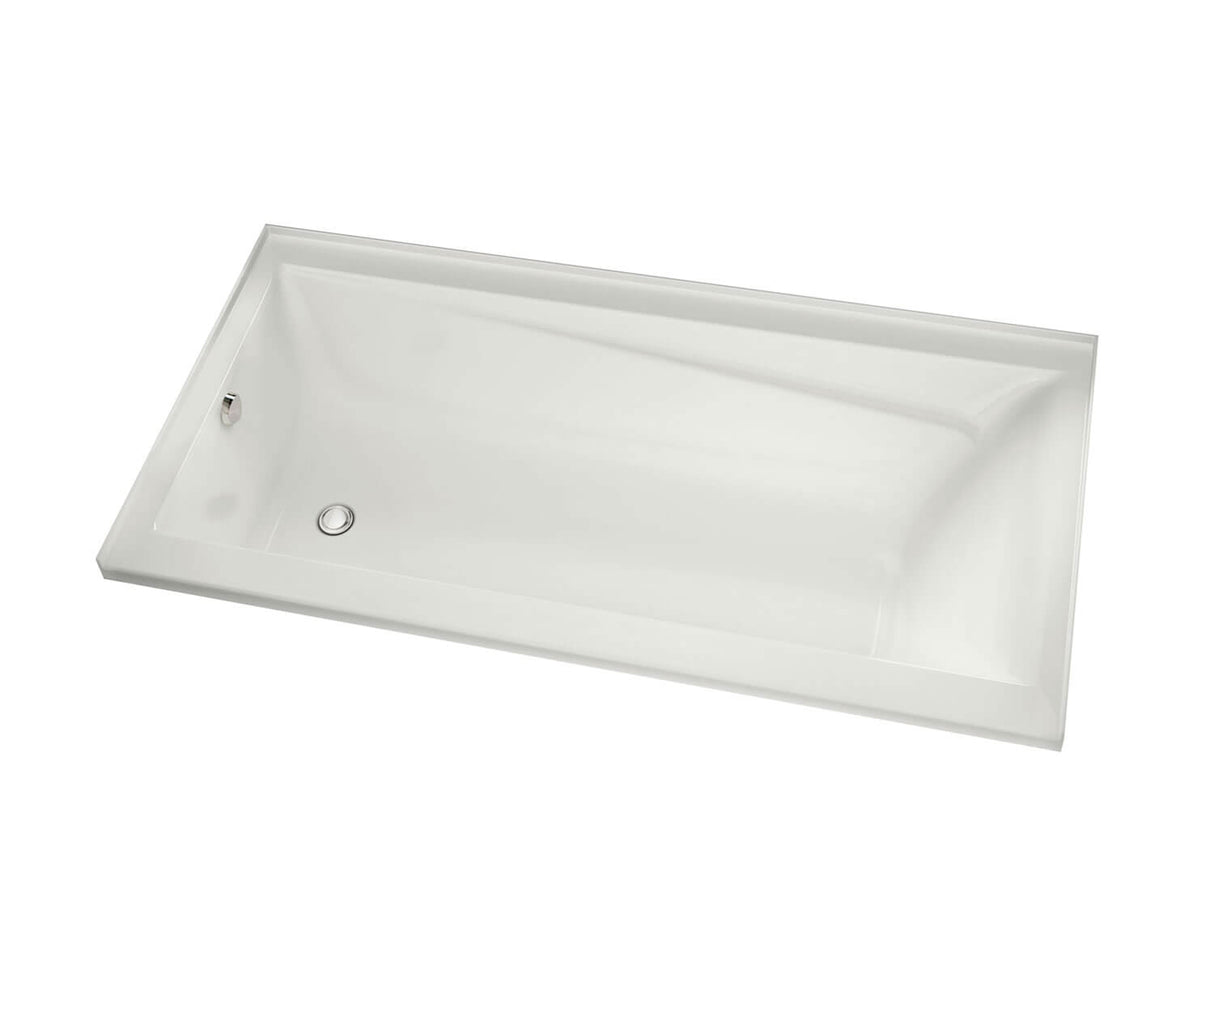 MAAX 106178-000-001-002 Exhibit 6636 IF Acrylic Alcove Right-Hand Drain Bathtub in White